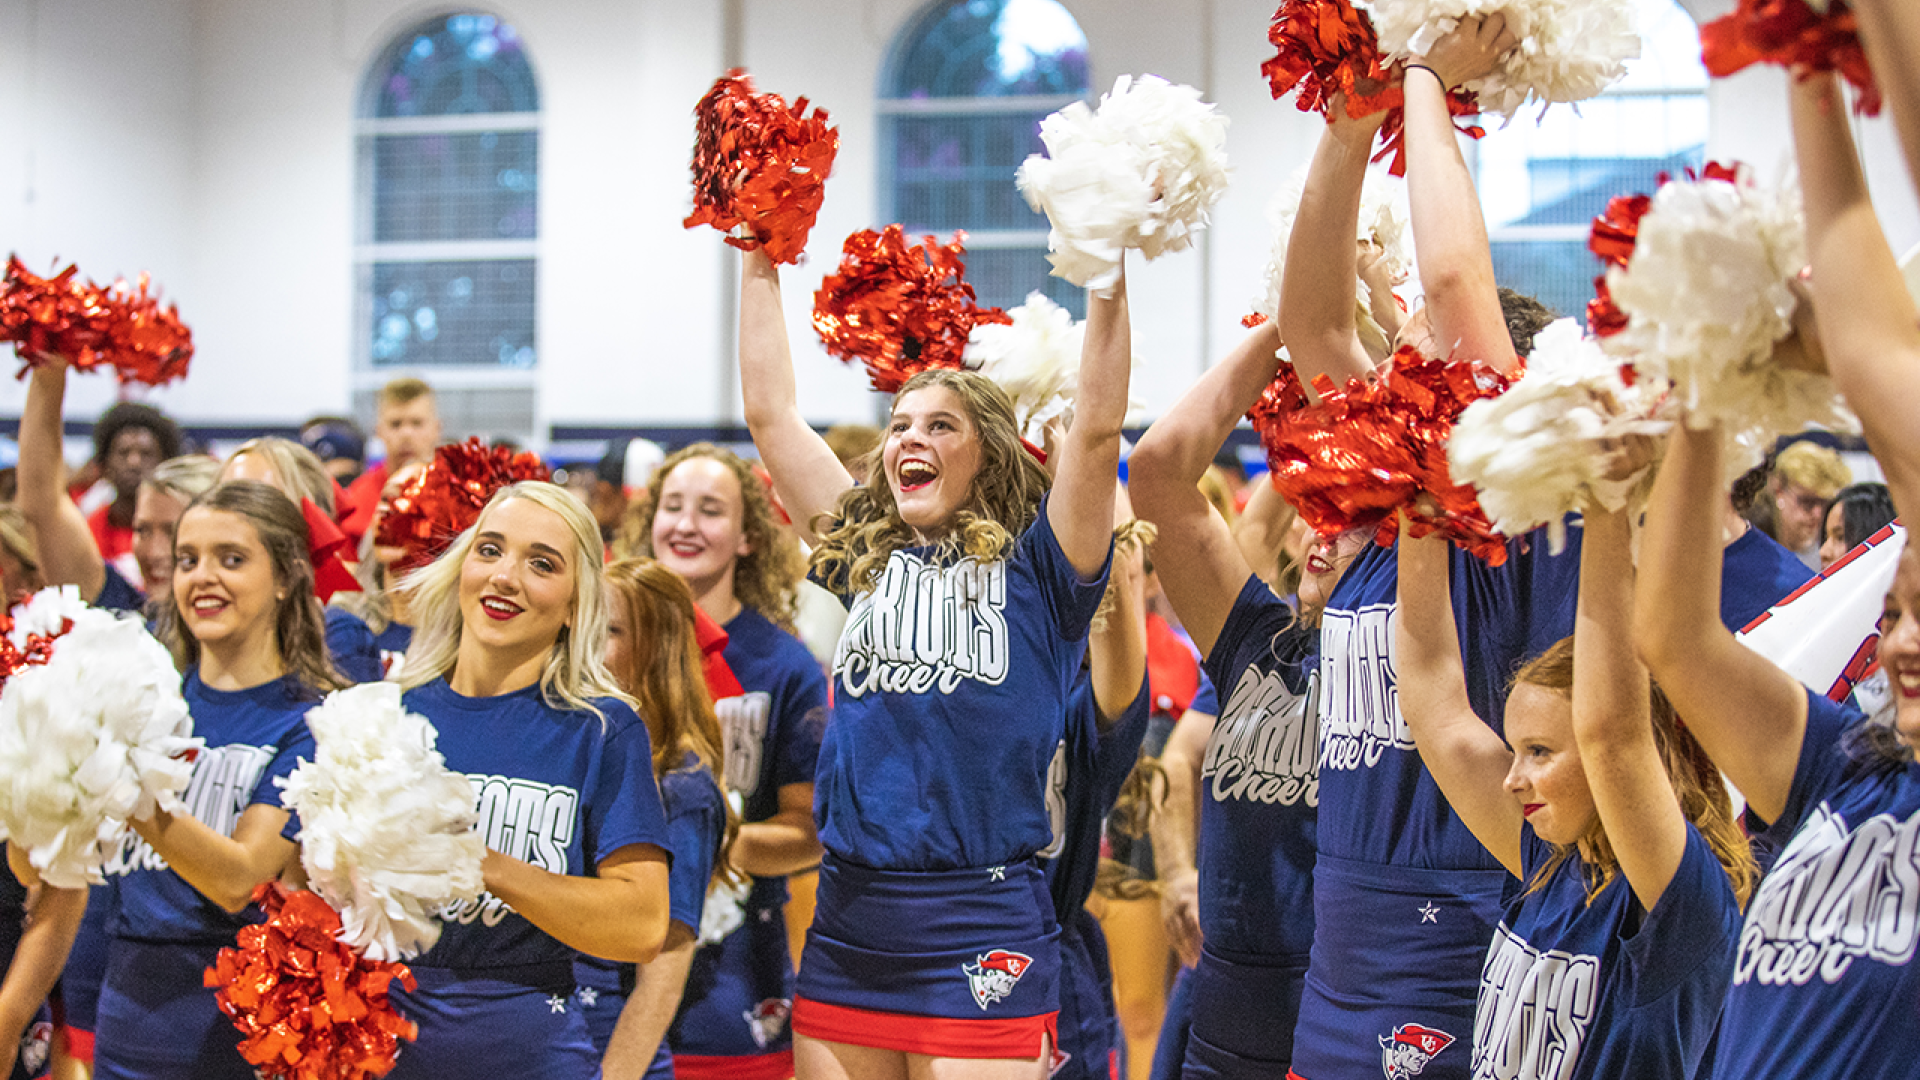 Cumberlands cheerleaders help welcome students to campus during Welcome Week. 